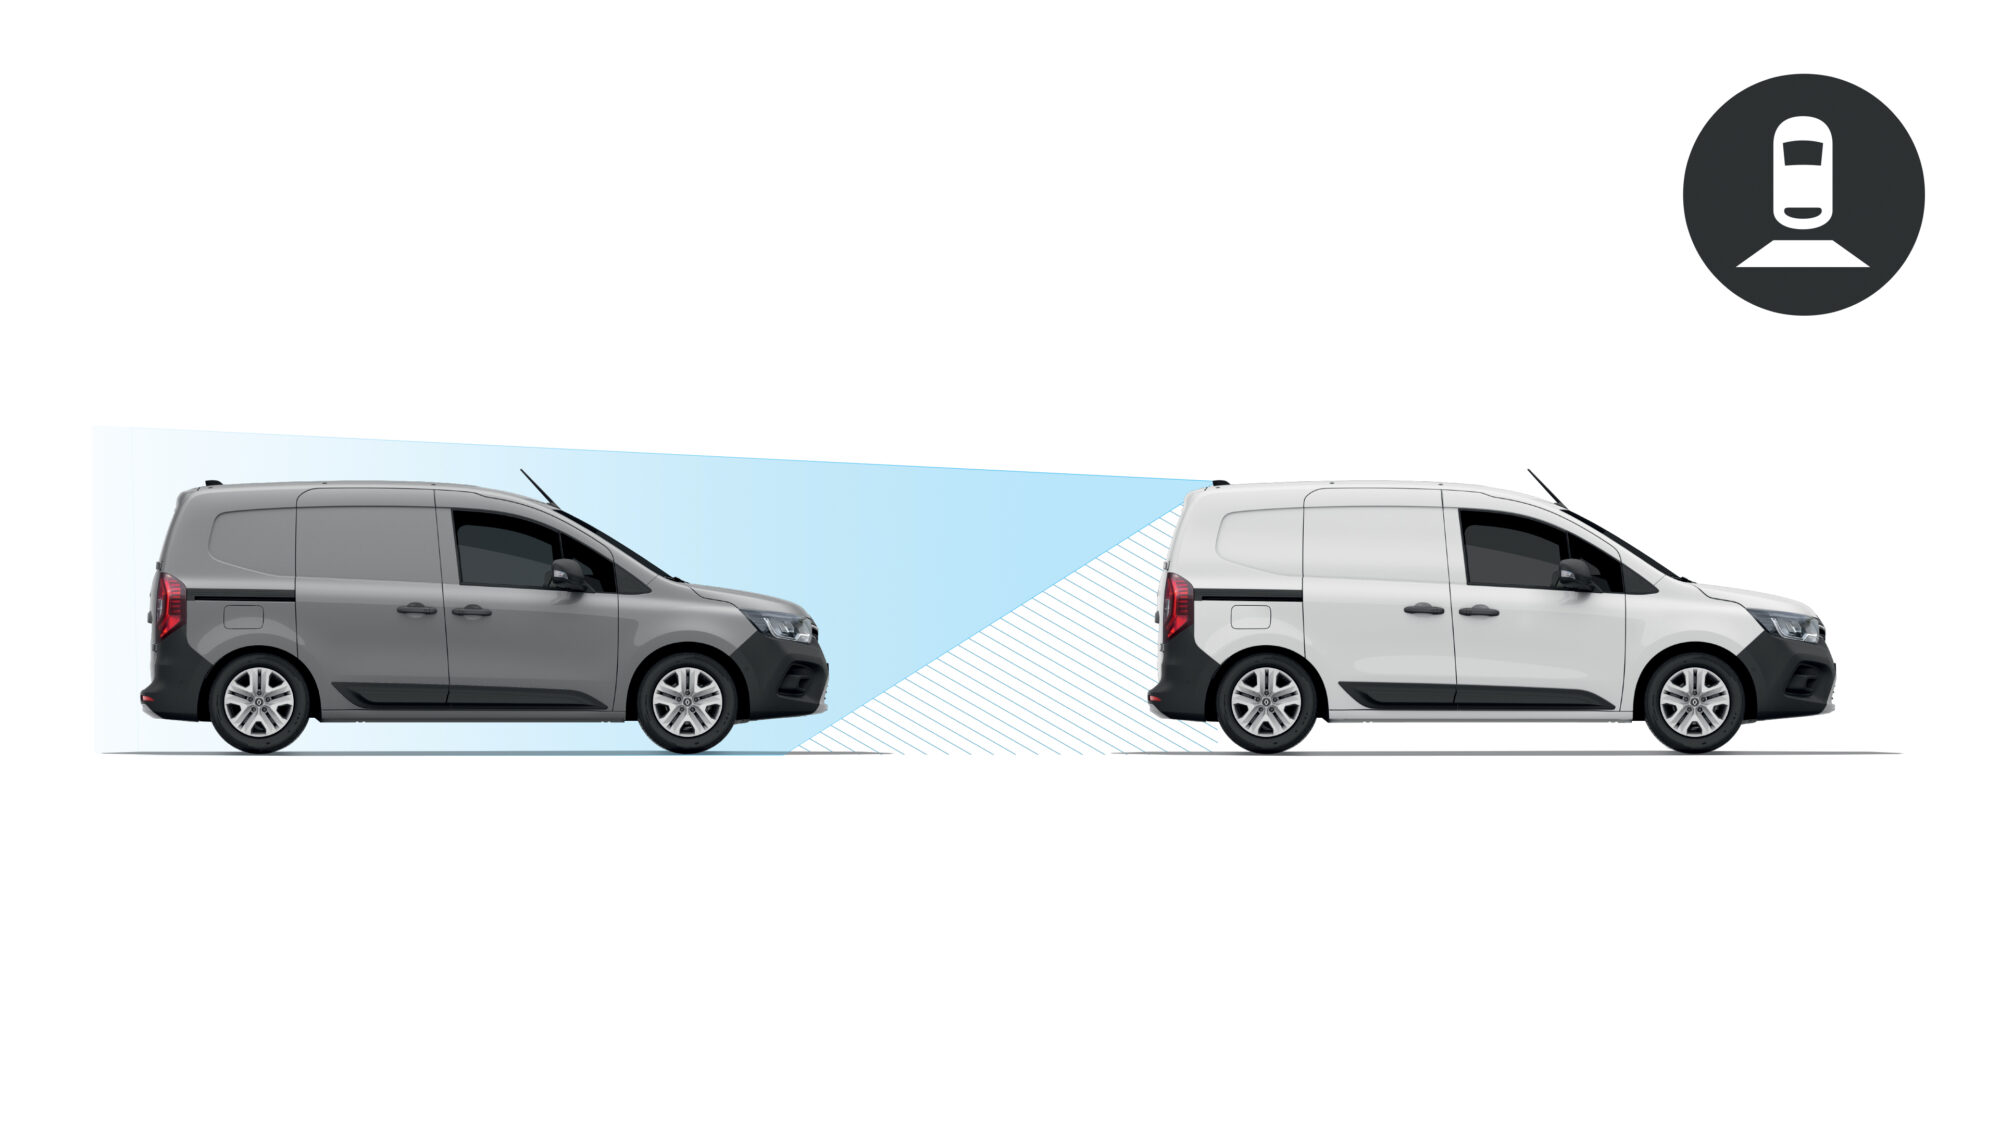 2021 - New Renault Kangoo Van - Technical drawings